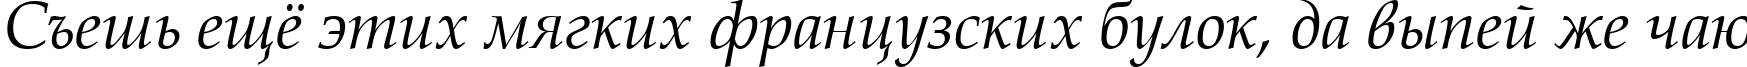 Пример написания шрифтом Book Antiqua Italic текста на русском